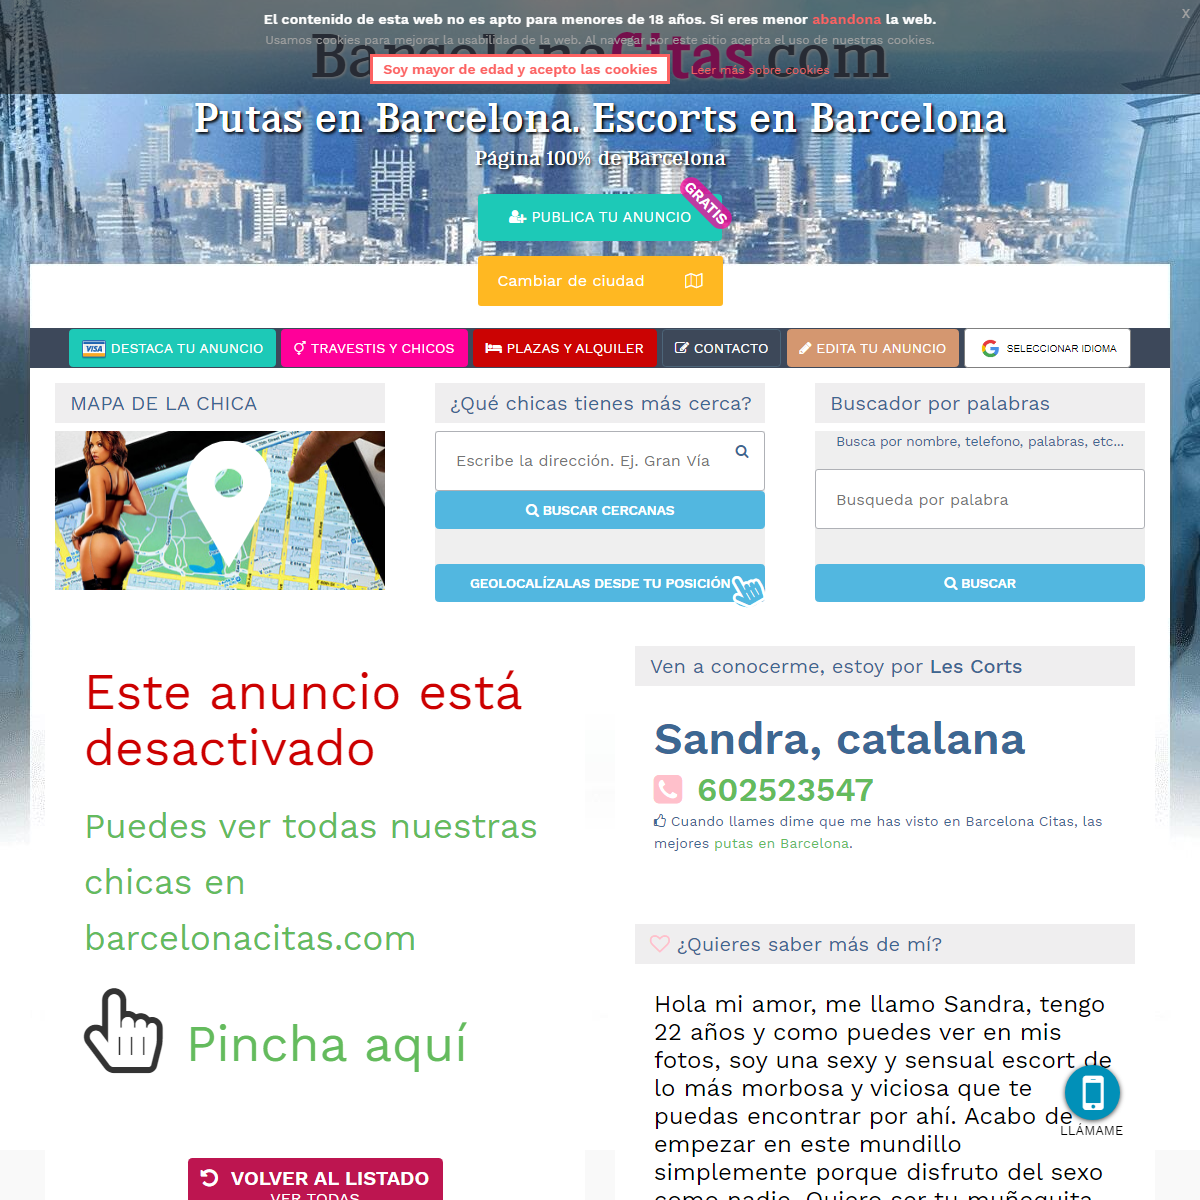 A complete backup of https://www.barcelonacitas.com/putas-barcelona-55133-sandra-catalana-602523547